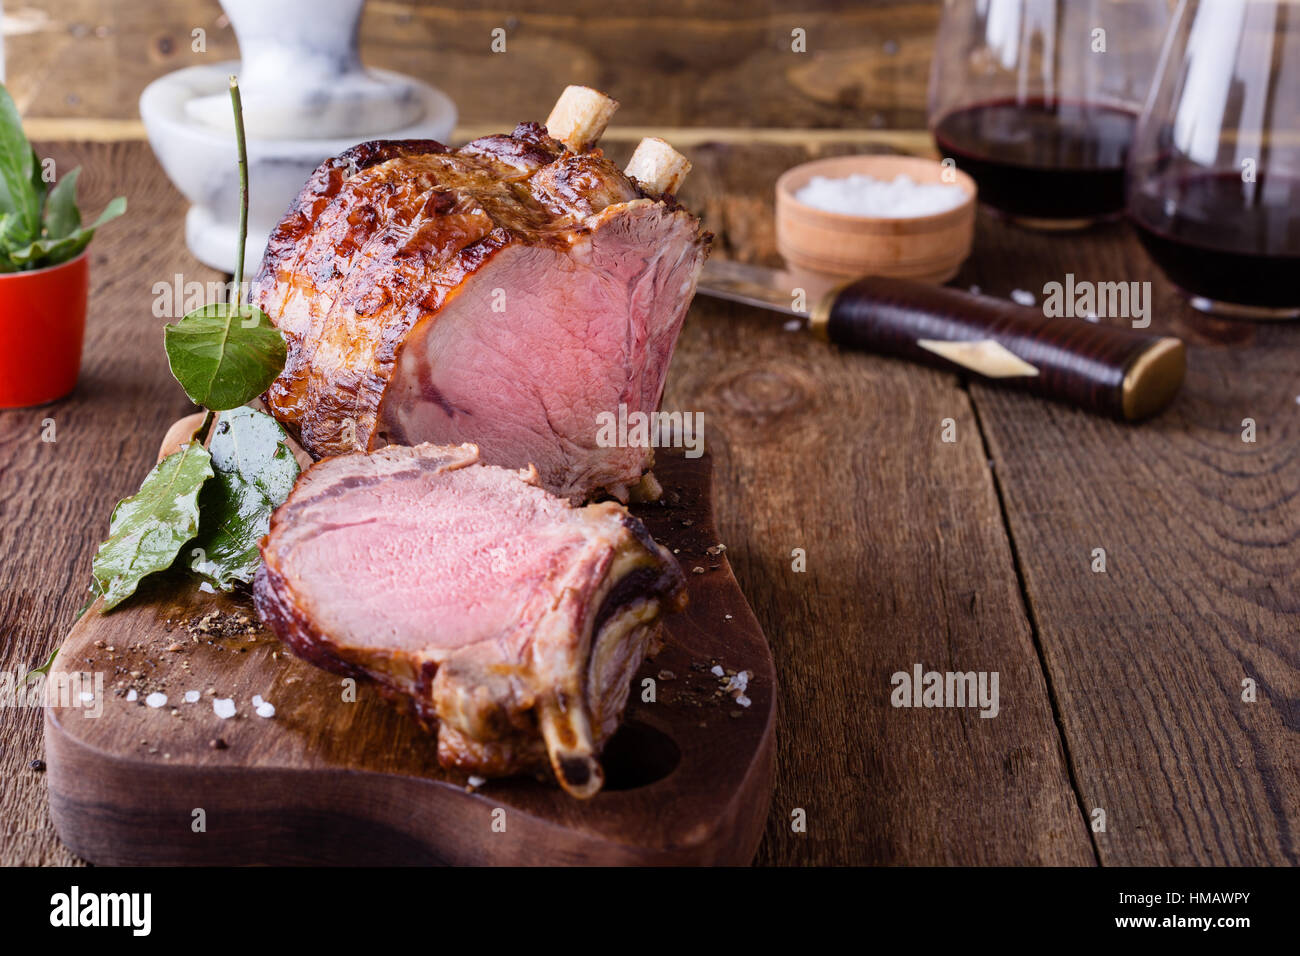 https://c8.alamy.com/comp/HMAWPY/homemade-bone-in-prime-rib-roast-HMAWPY.jpg